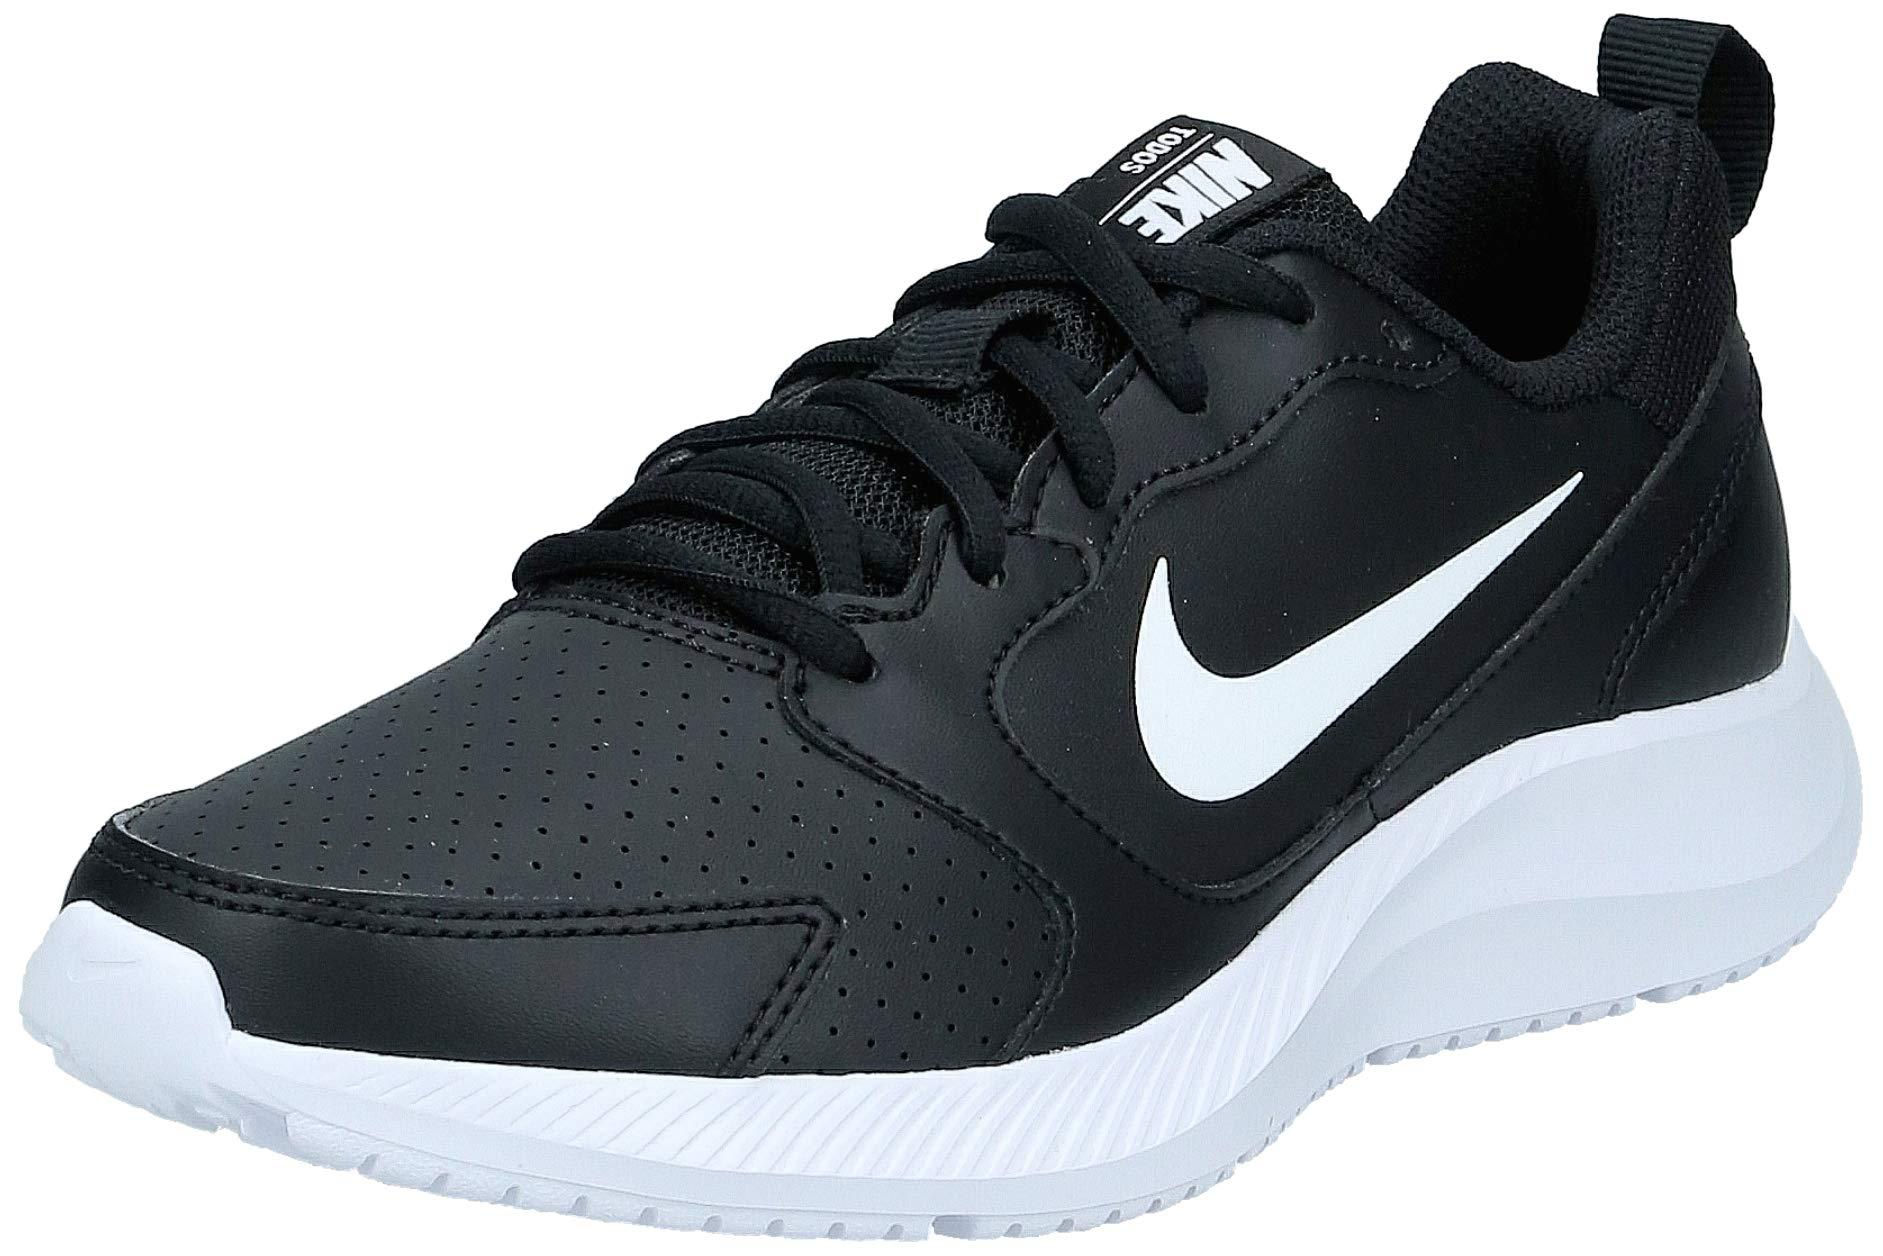 Nike Leather Todos Rn Shoe in Black/Black-Black-Anthracite (Black) - Lyst